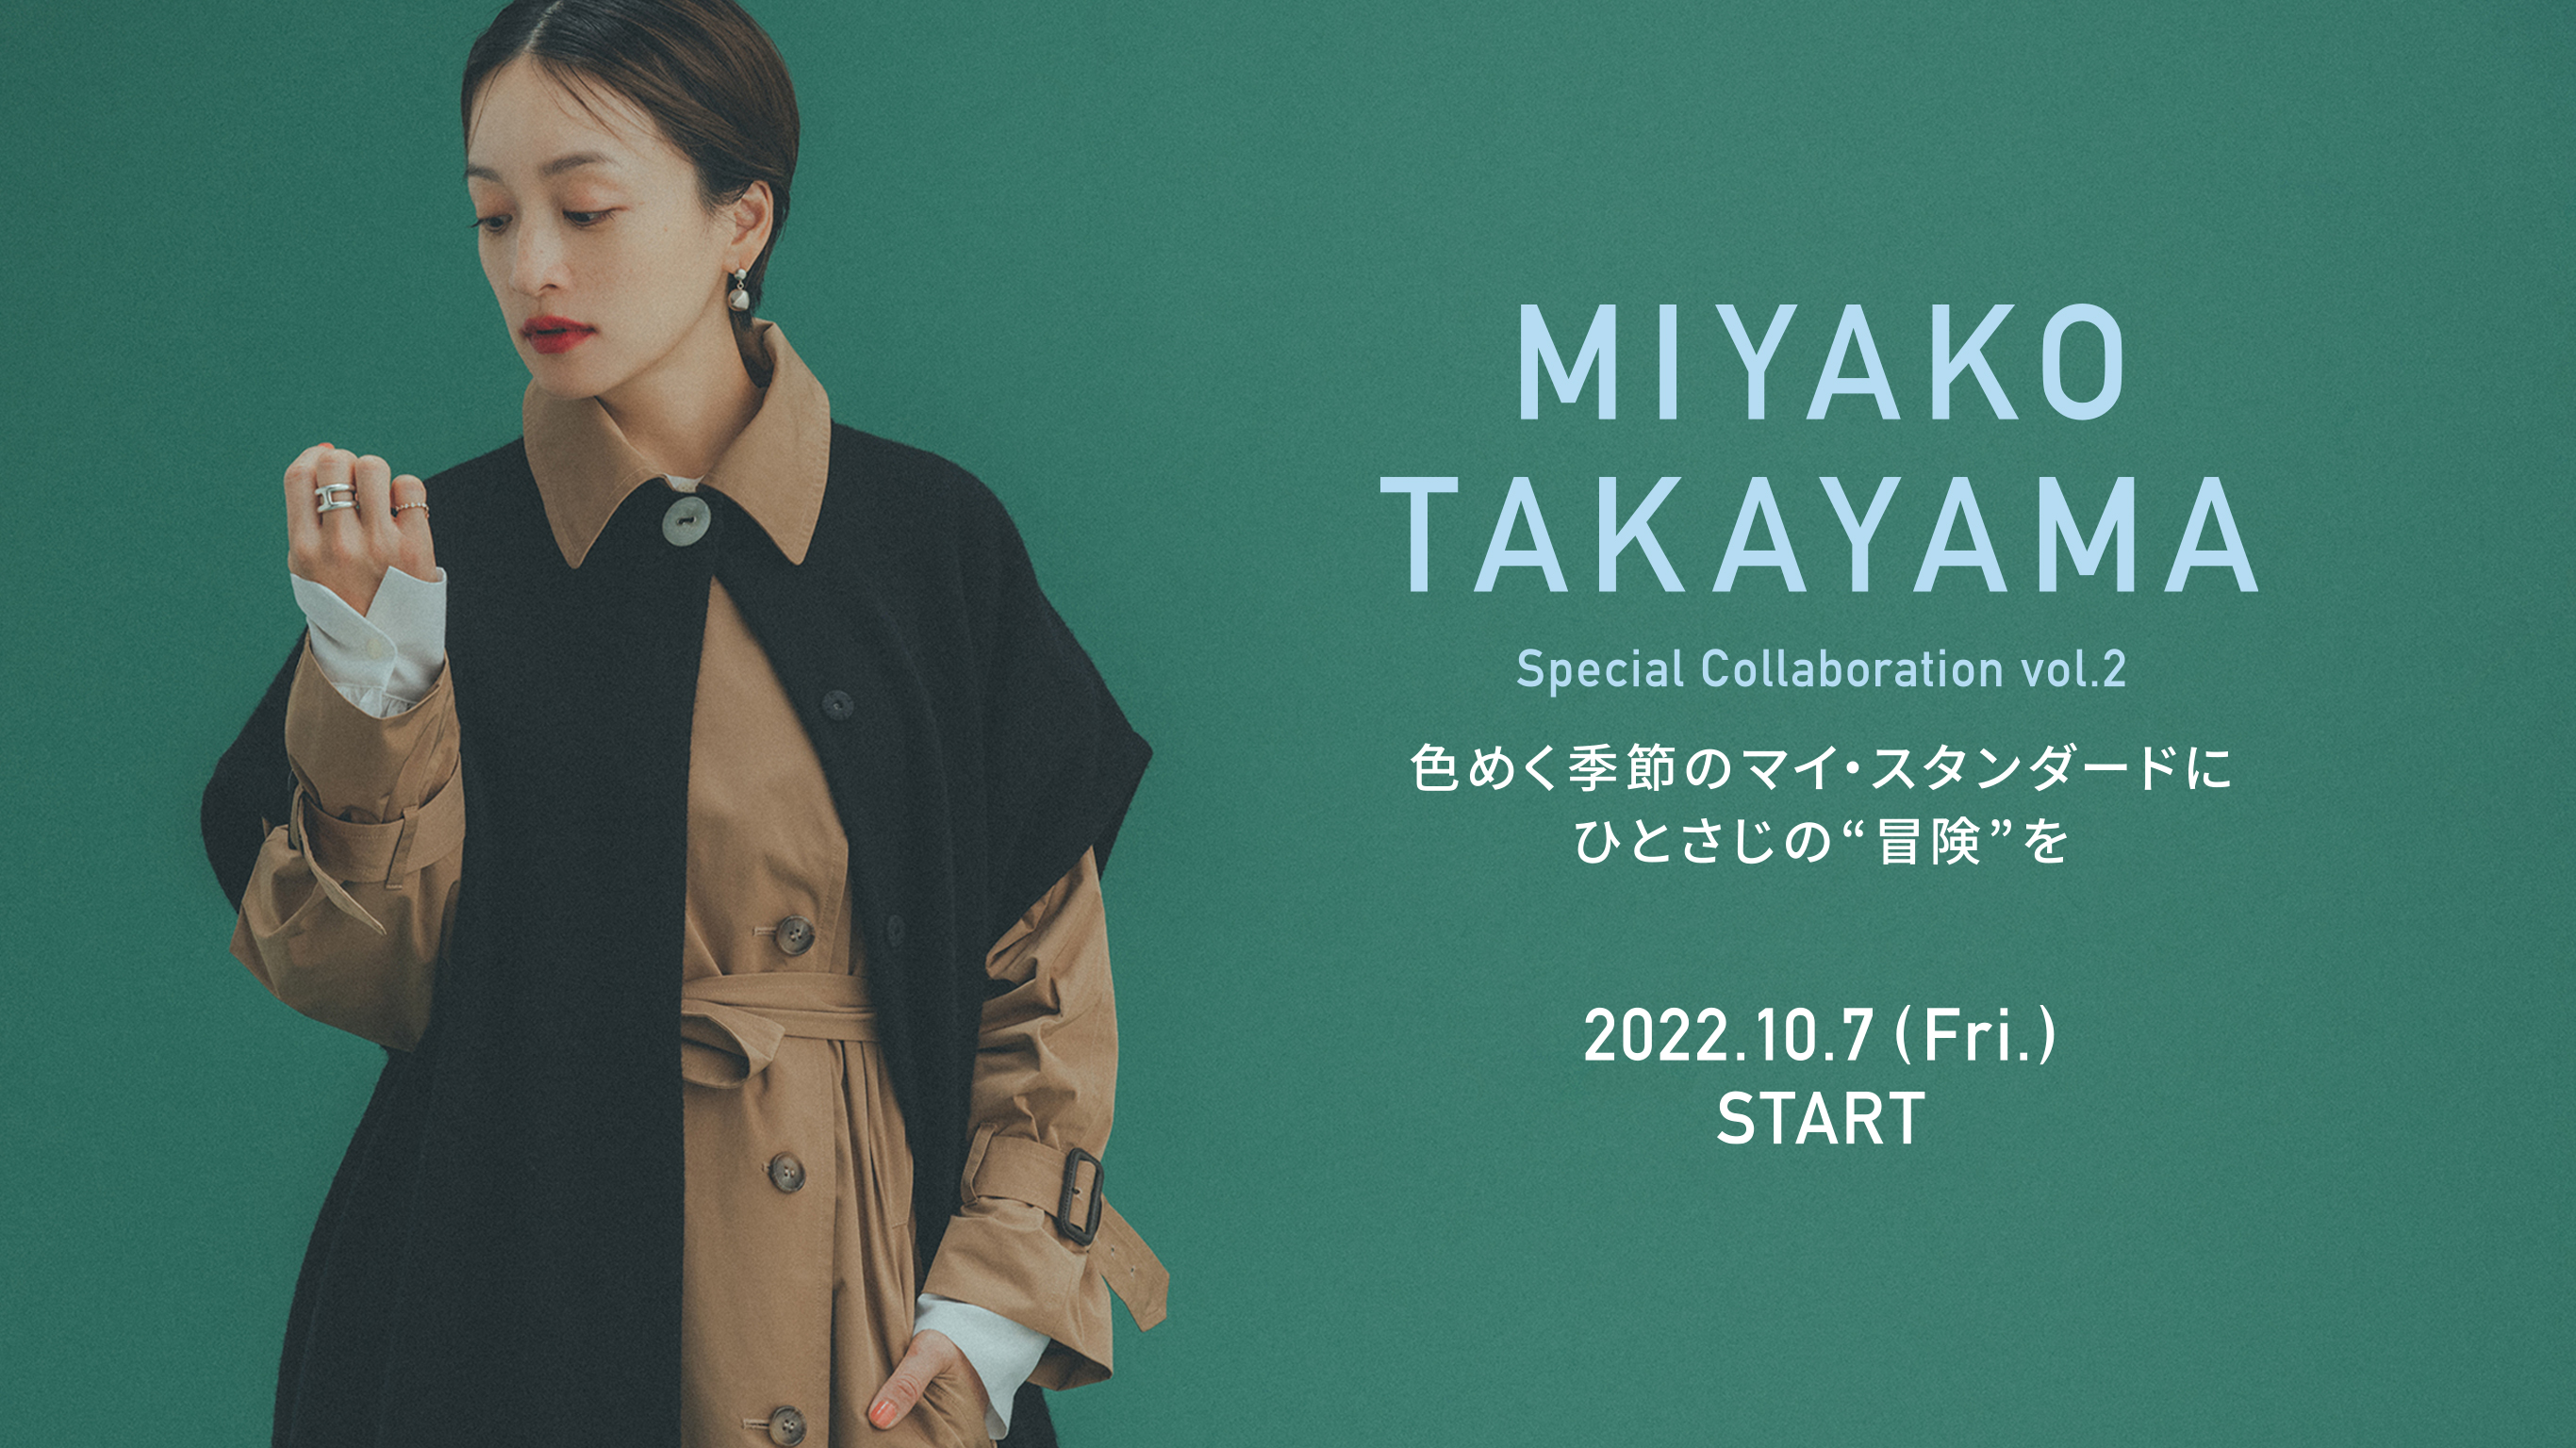 MI YAKO TAKAYAMA Special Collaboration vol.2
色めく季節のマイ・スタンダードにひとさじの“冒険”を2022.10.7 (Fri.)START